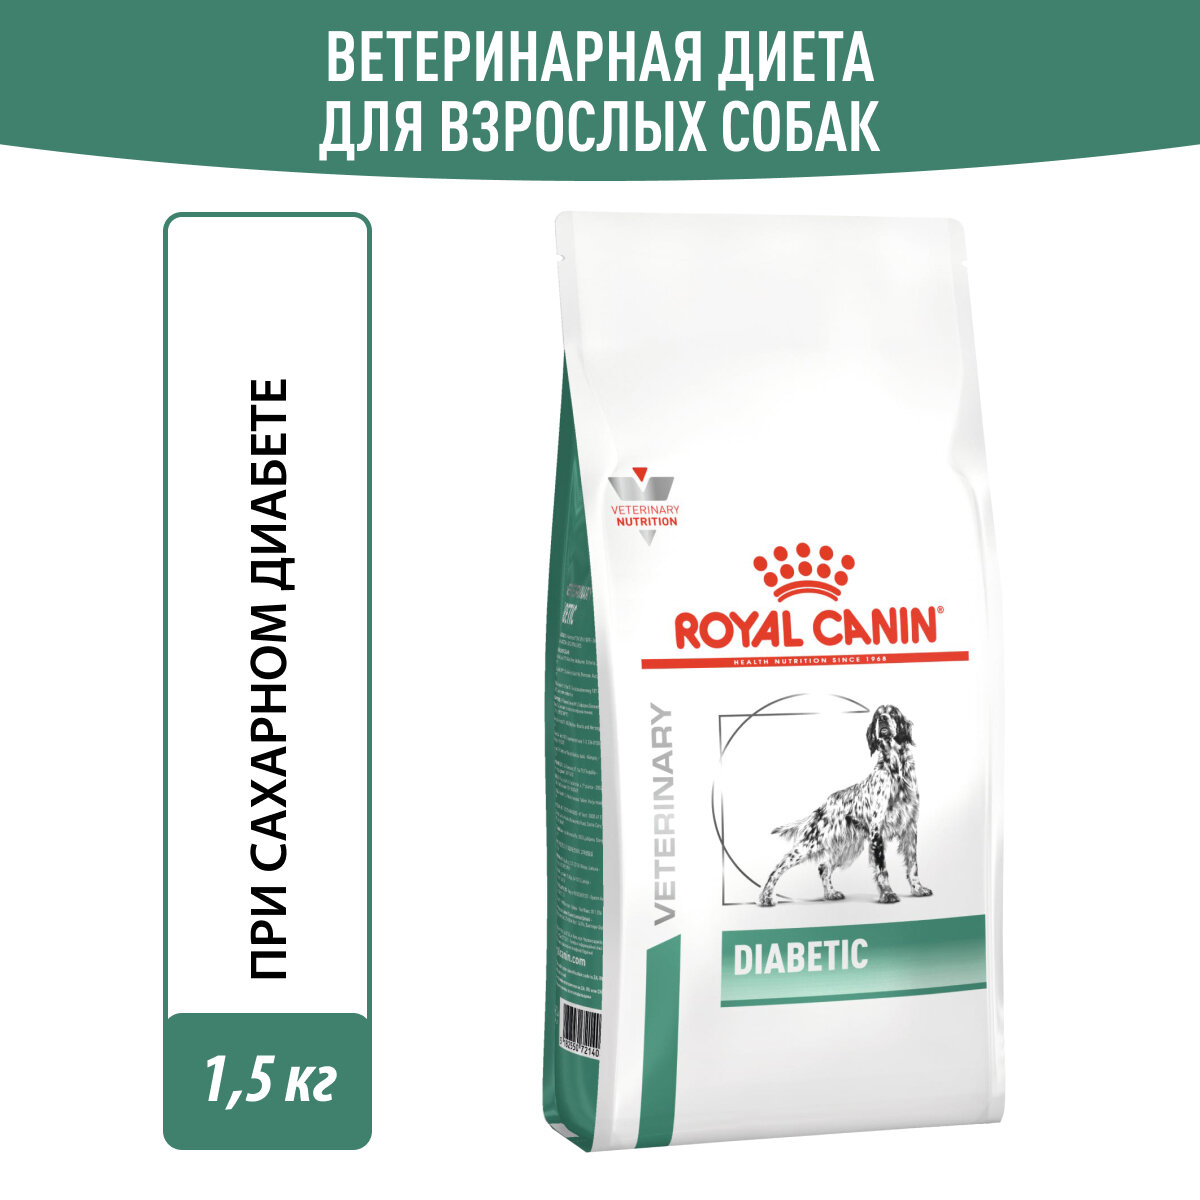 Royal Canin Diabetic корм для собак при сахарном диабете Диетический, 1,5 кг.